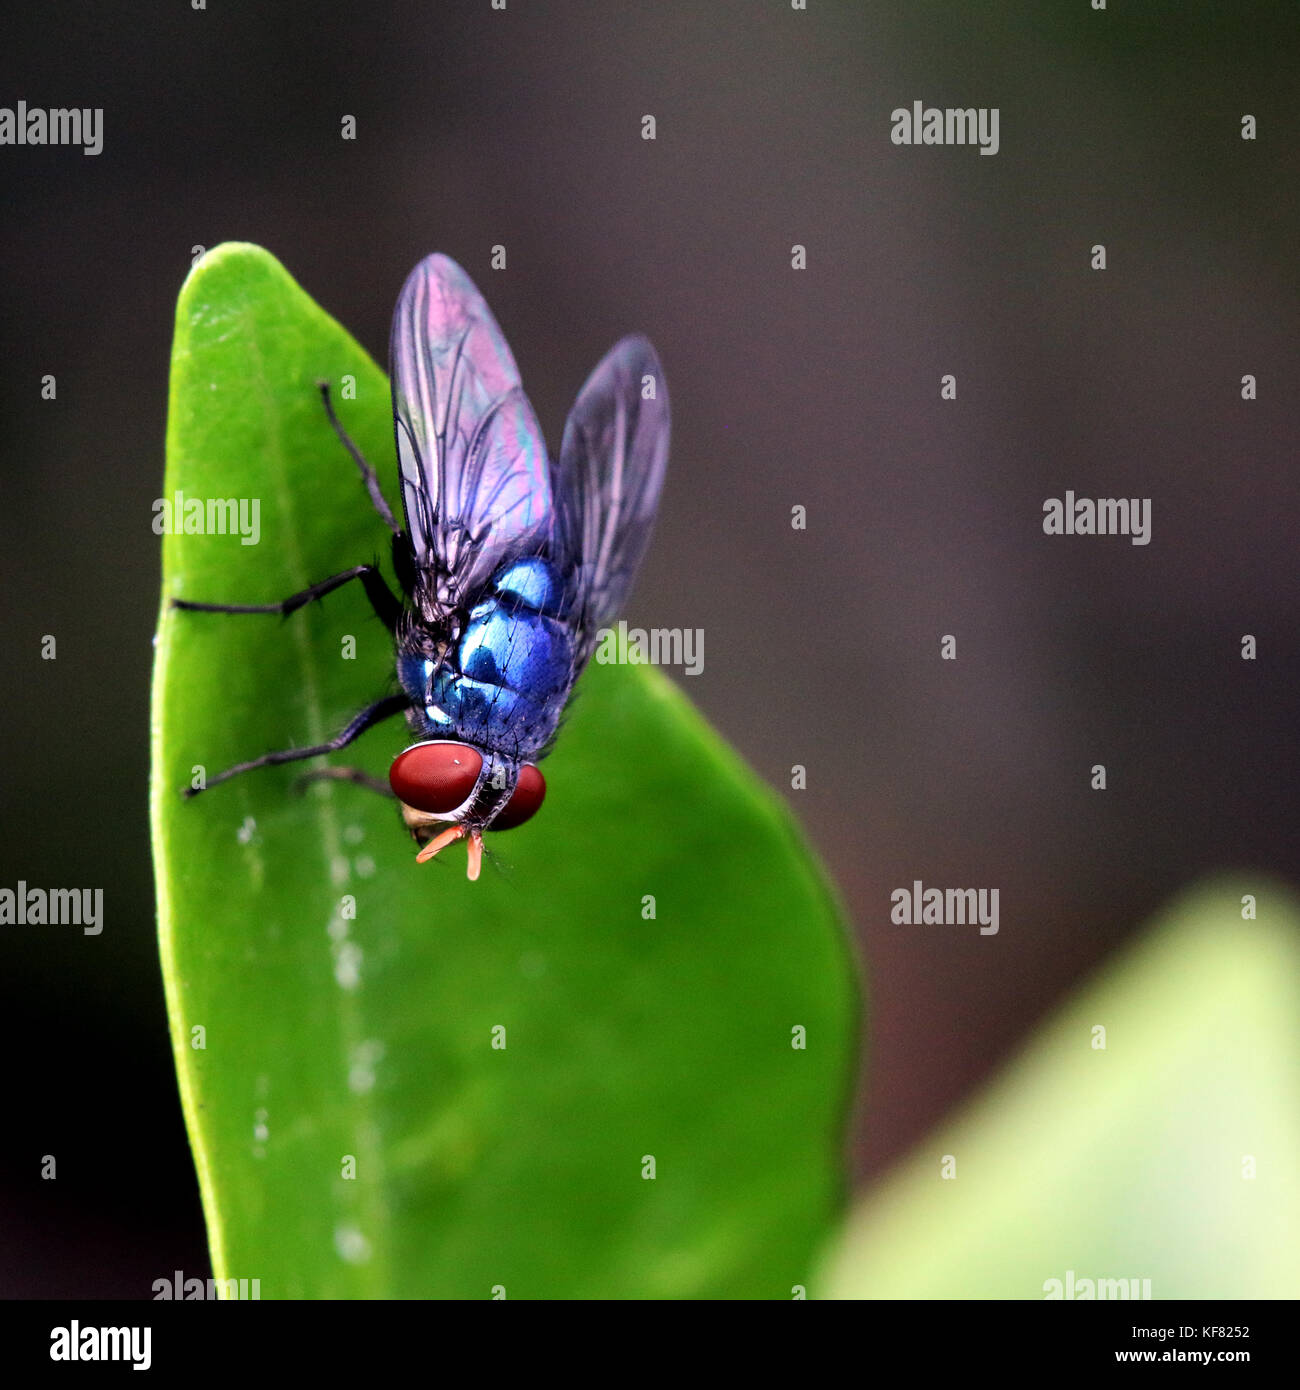 Blue bottle fly on a leaf Stock Photo